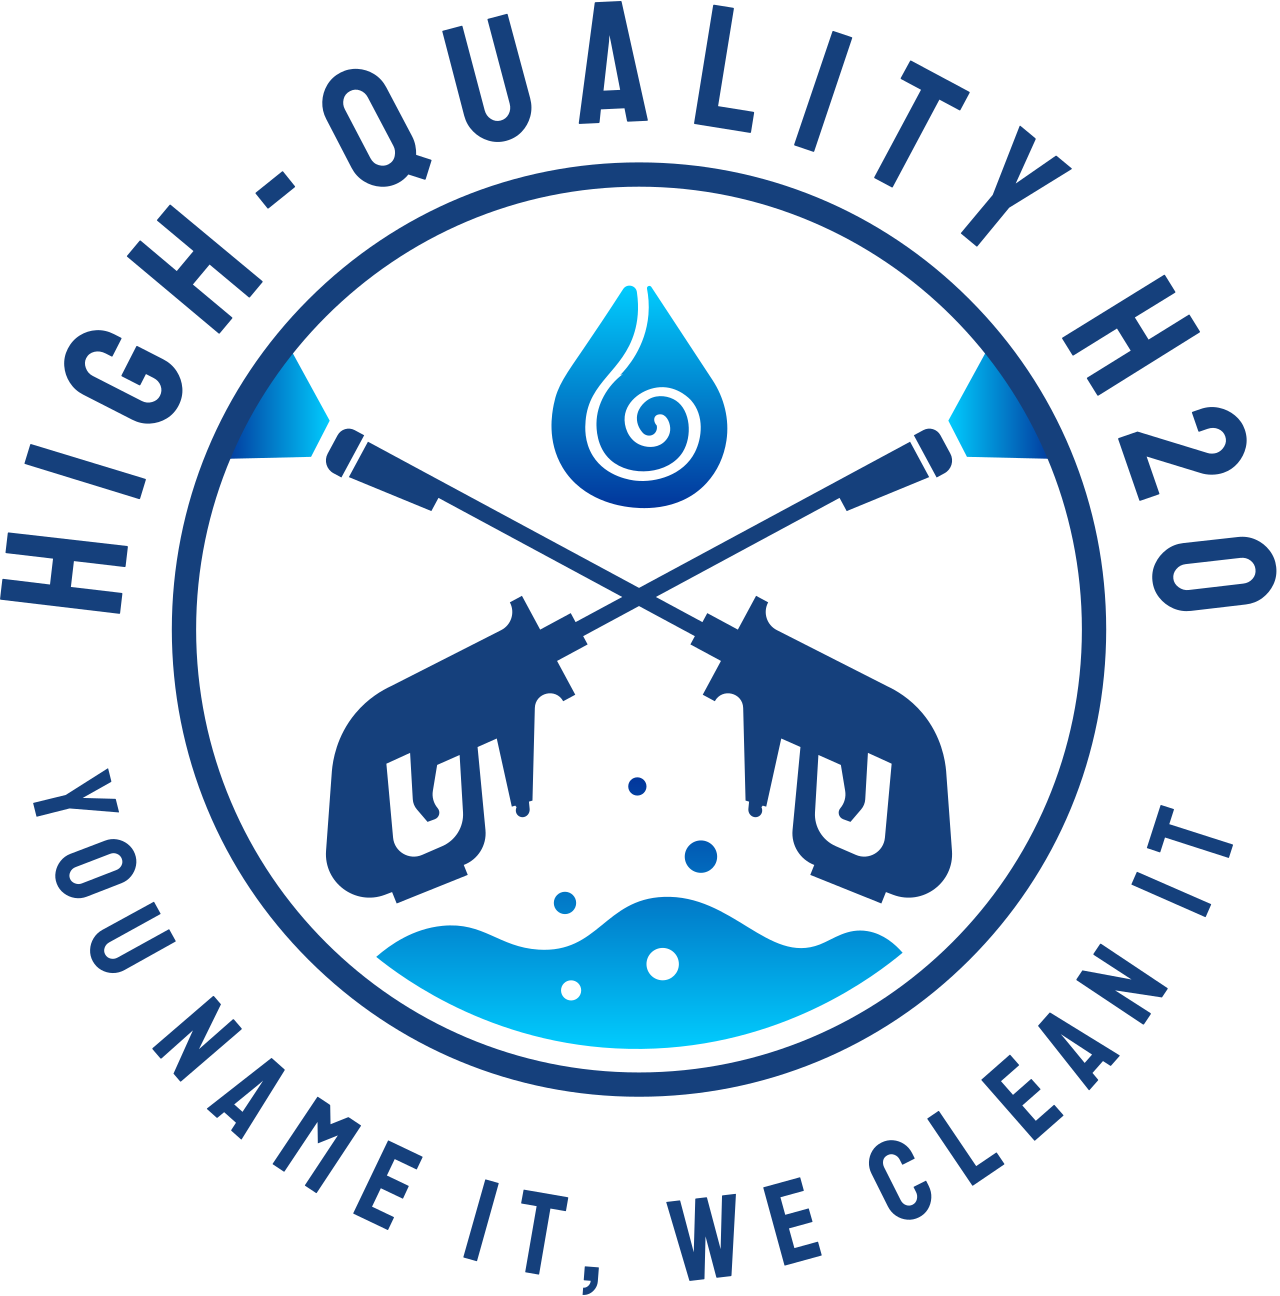 HIGH-QUALITY H2O's web page